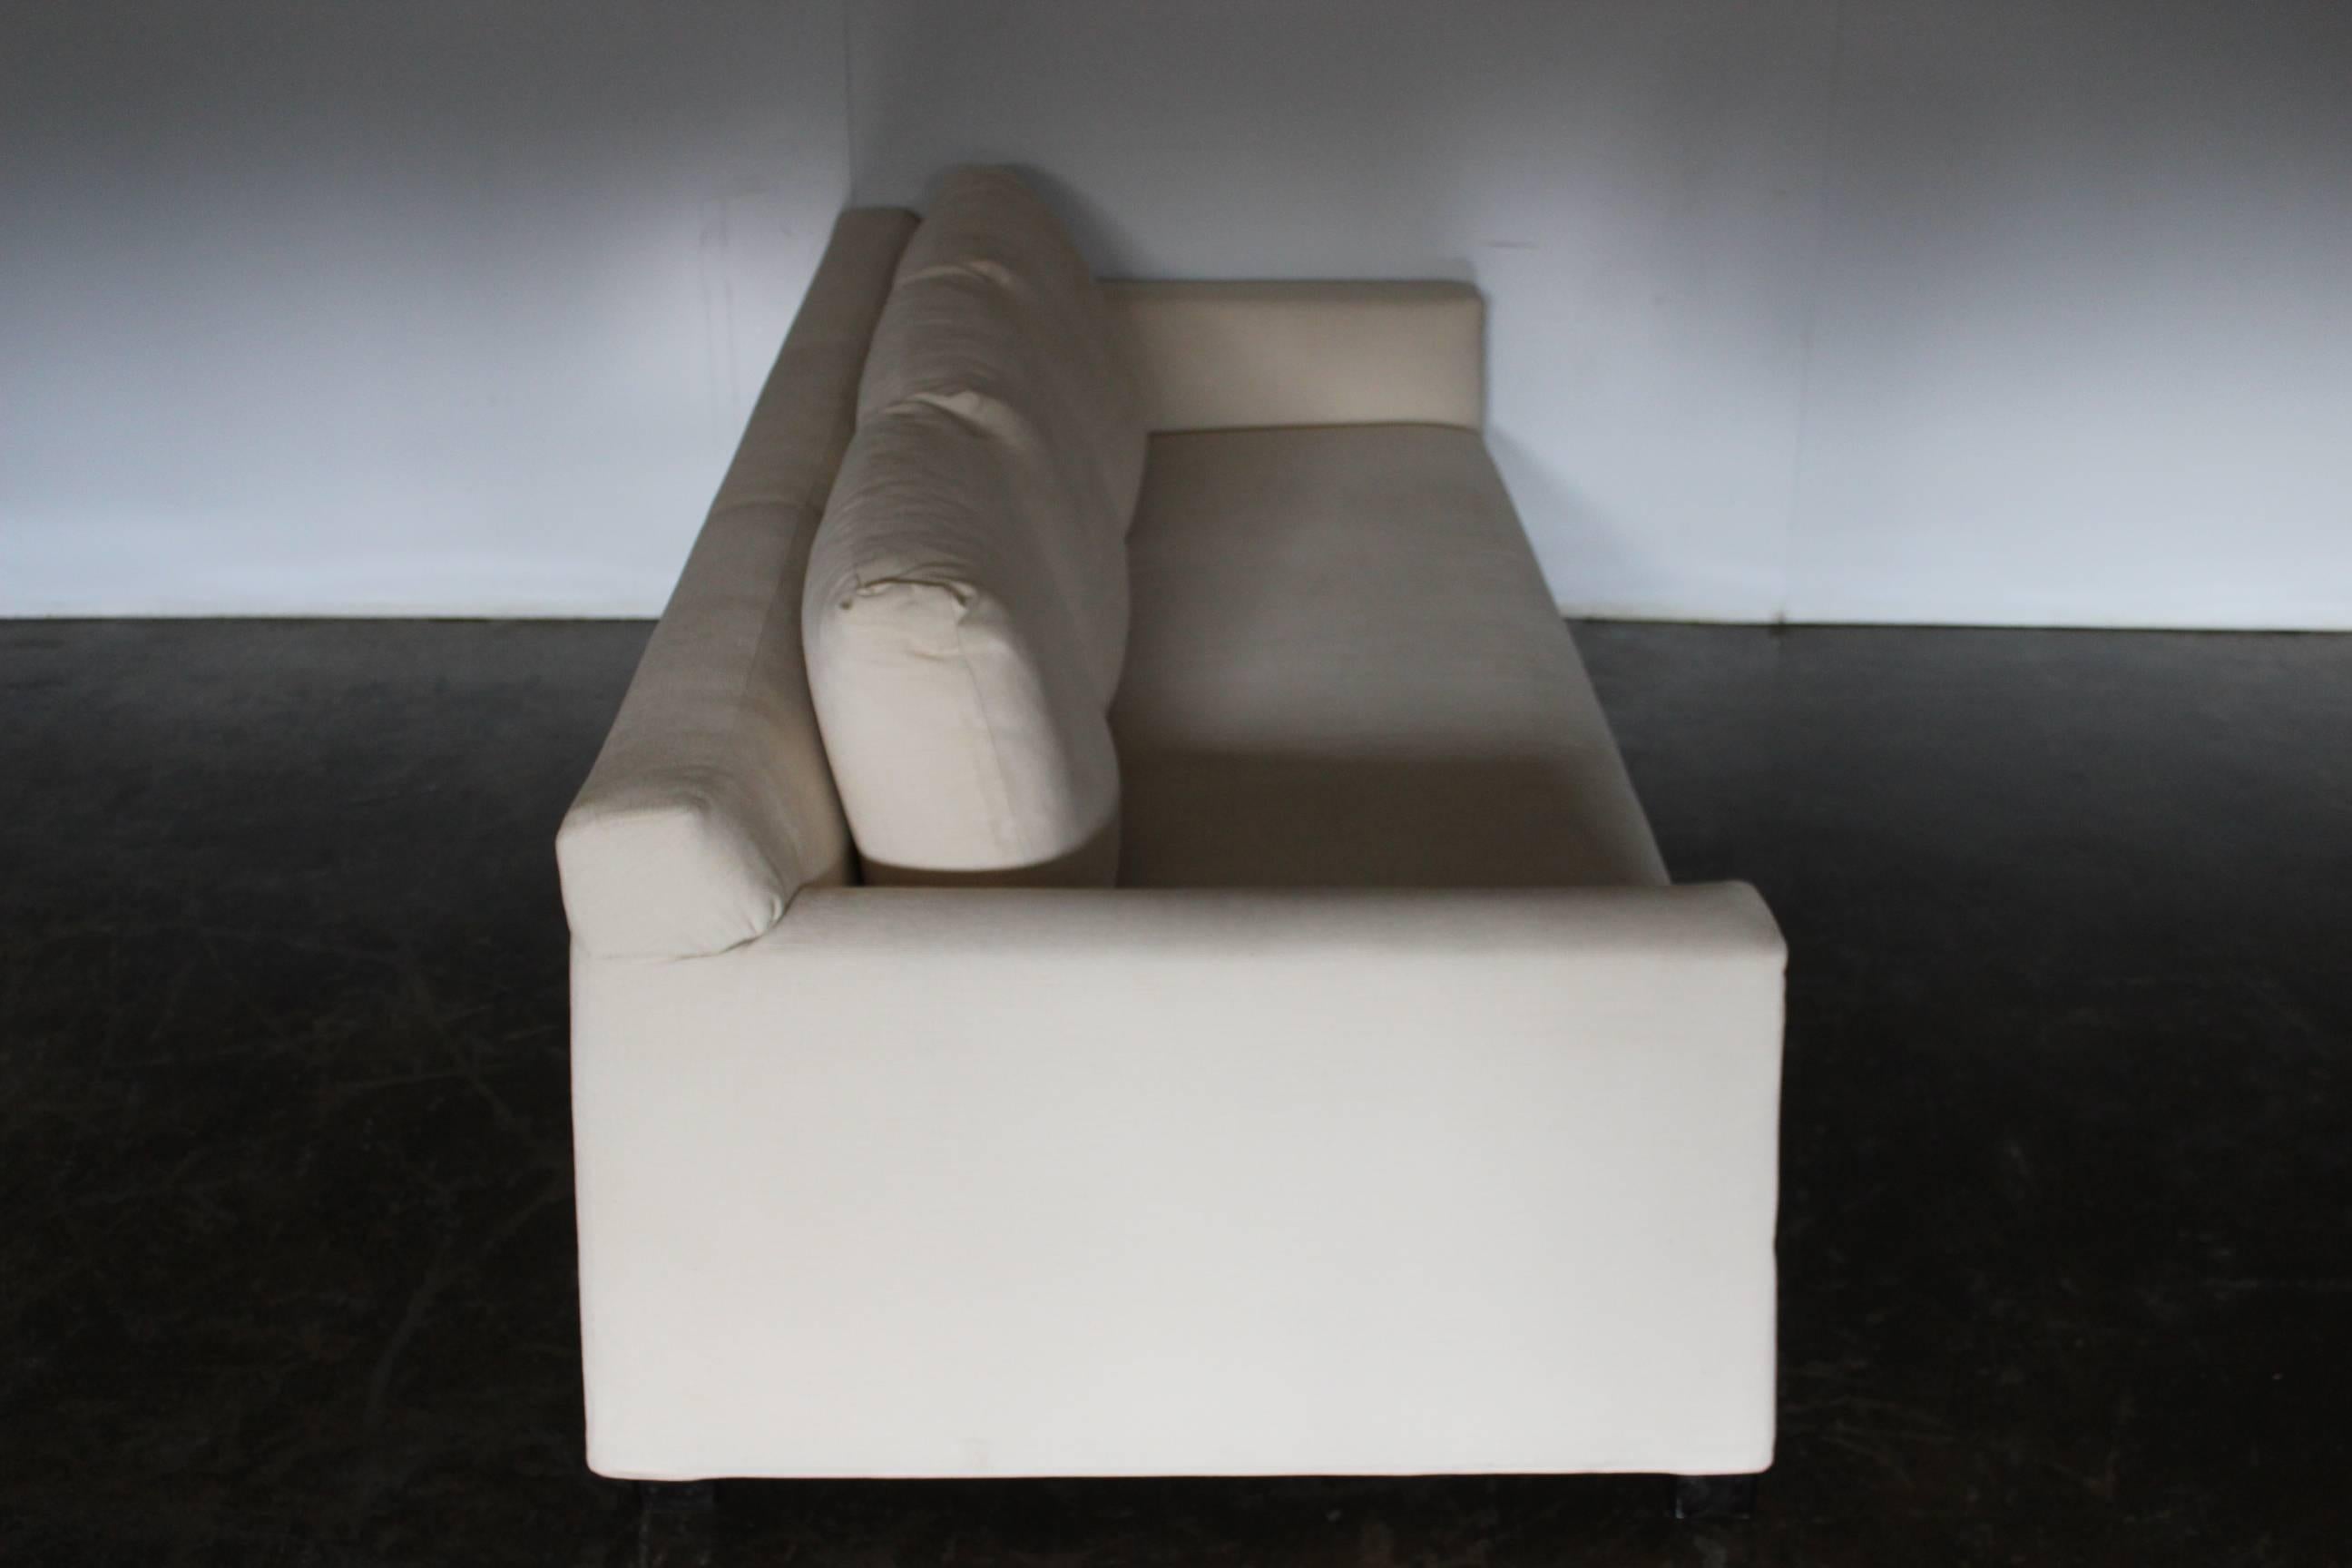 Hand-Crafted Minotti “Gilbert” Three-Seat Sofa in Neutral Cream “Corda” Fabric